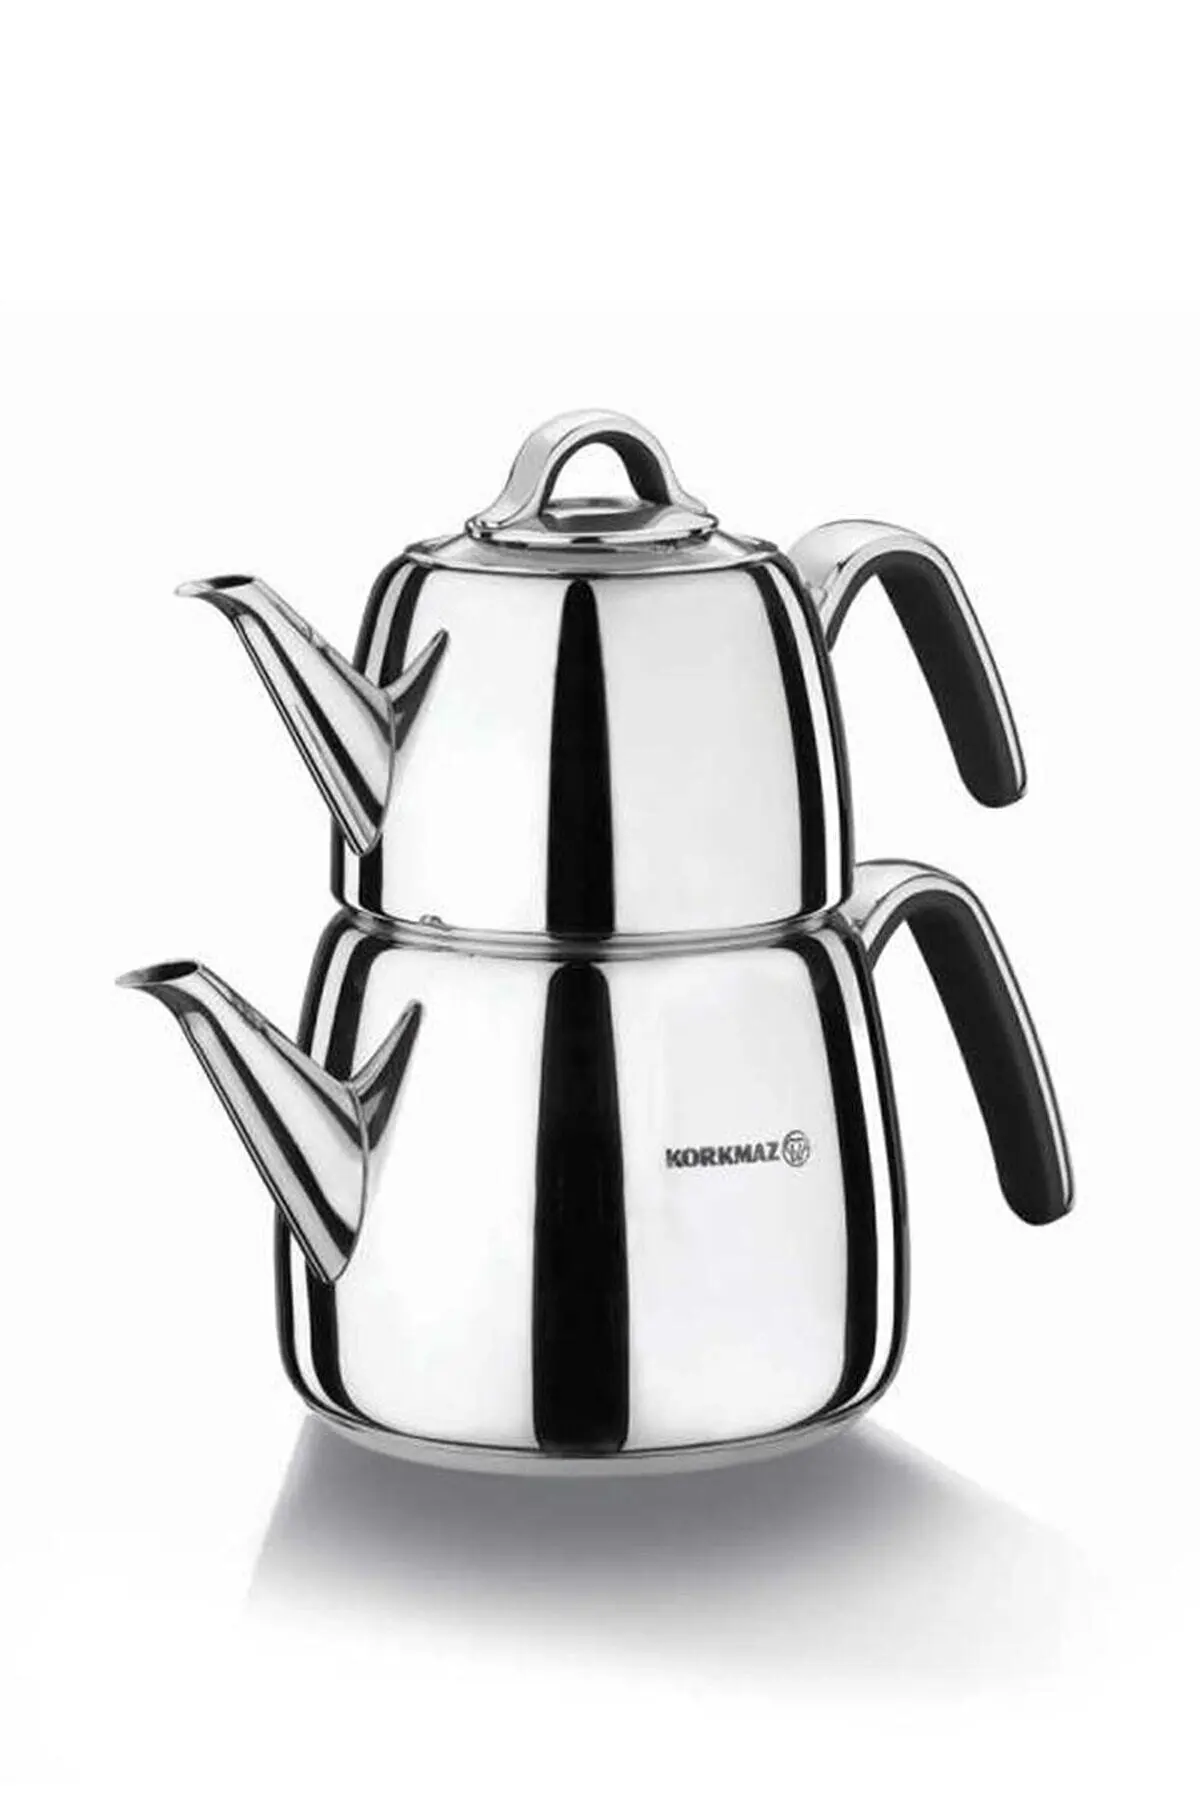 

Korkmaz Vertex Teapot Stainless Steel Black Handle Capacity 3 Lt Turkish Teapot Set Brewing Tea For tea Pot Set Made in Turkey